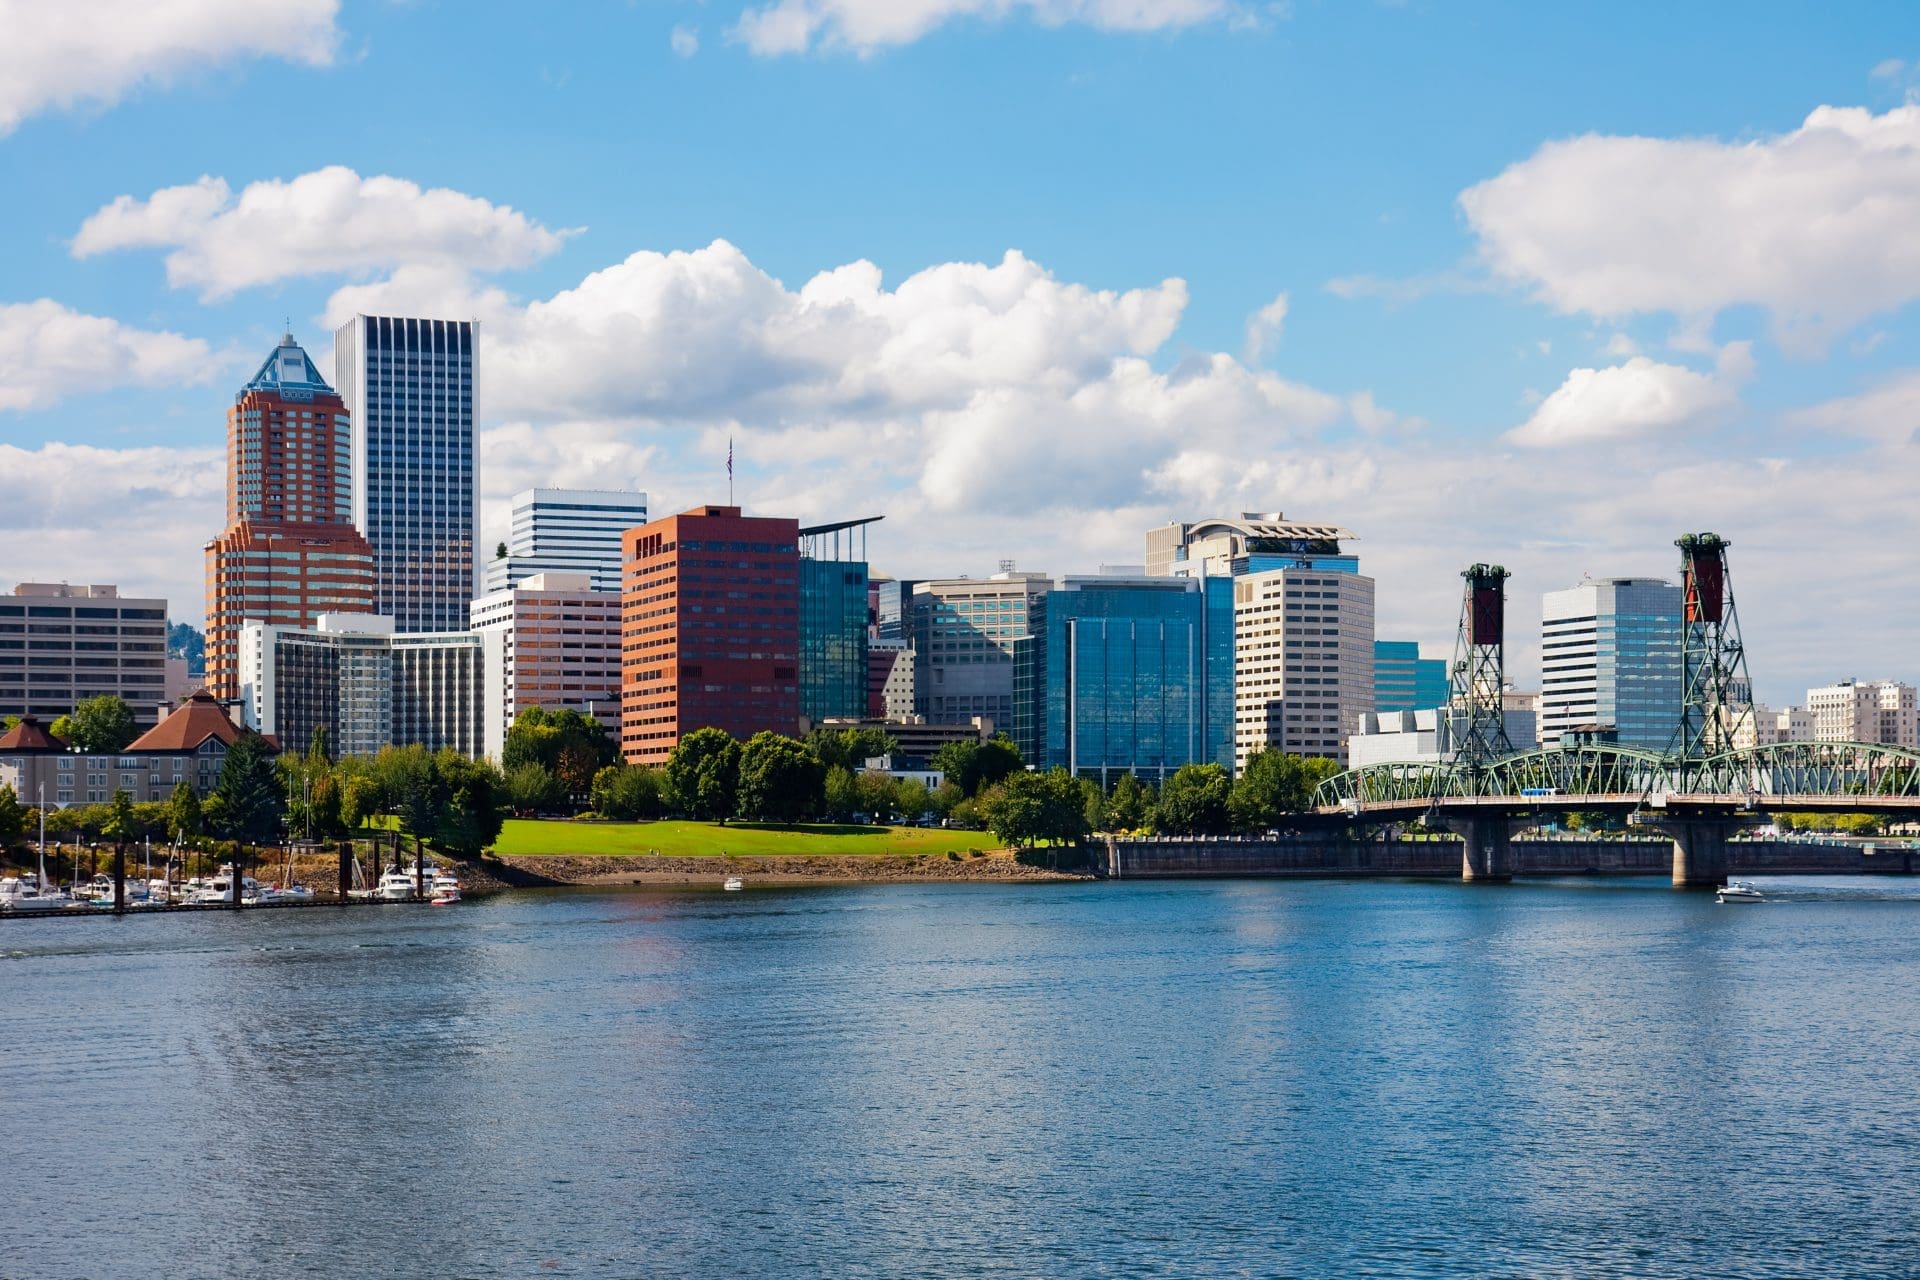 Is Portland a Walkable City?